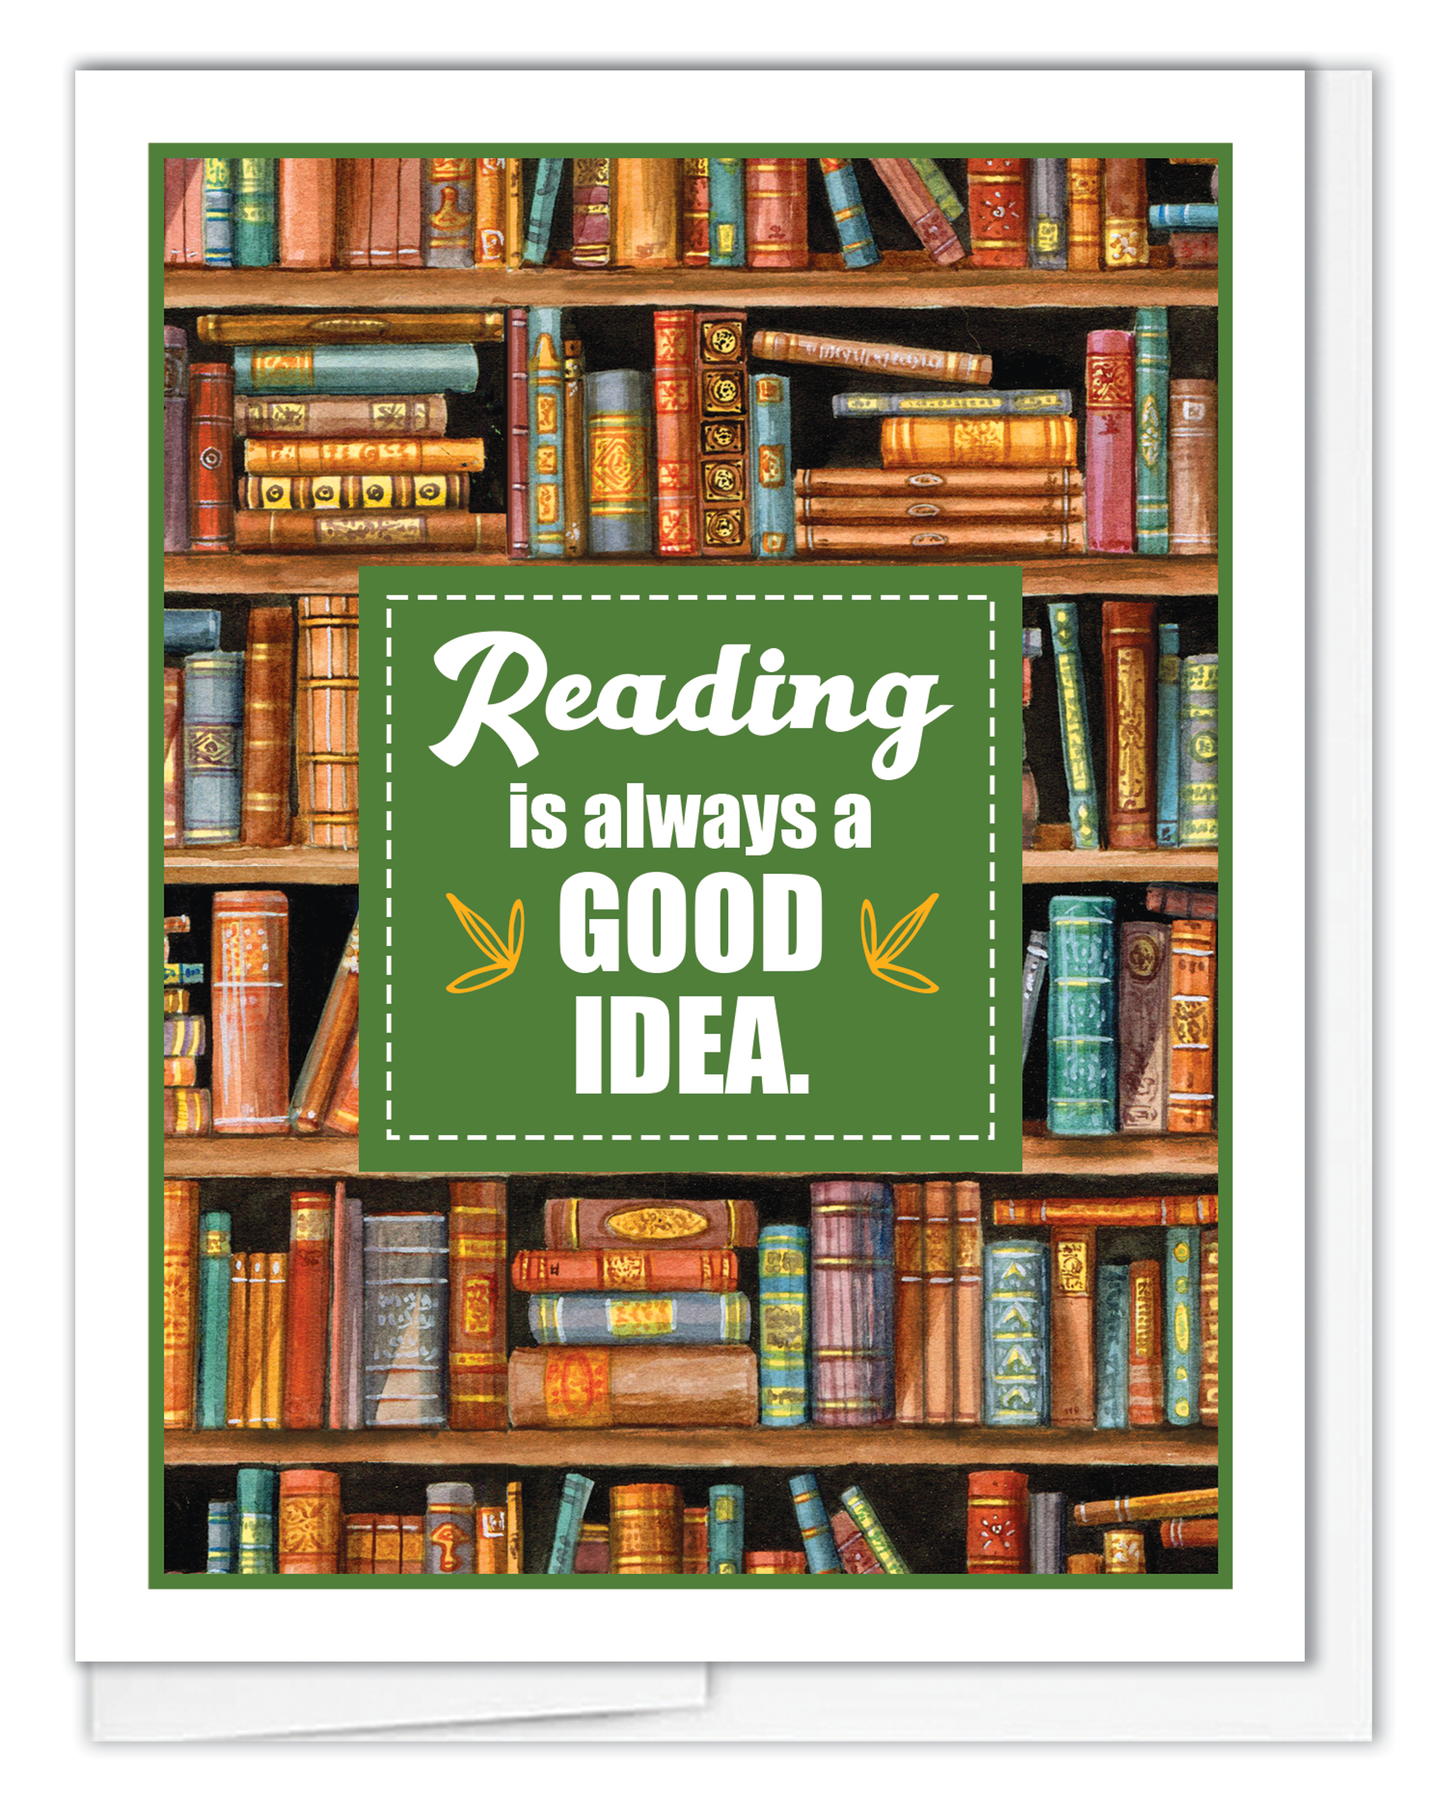 Dear Reader A Good Idea